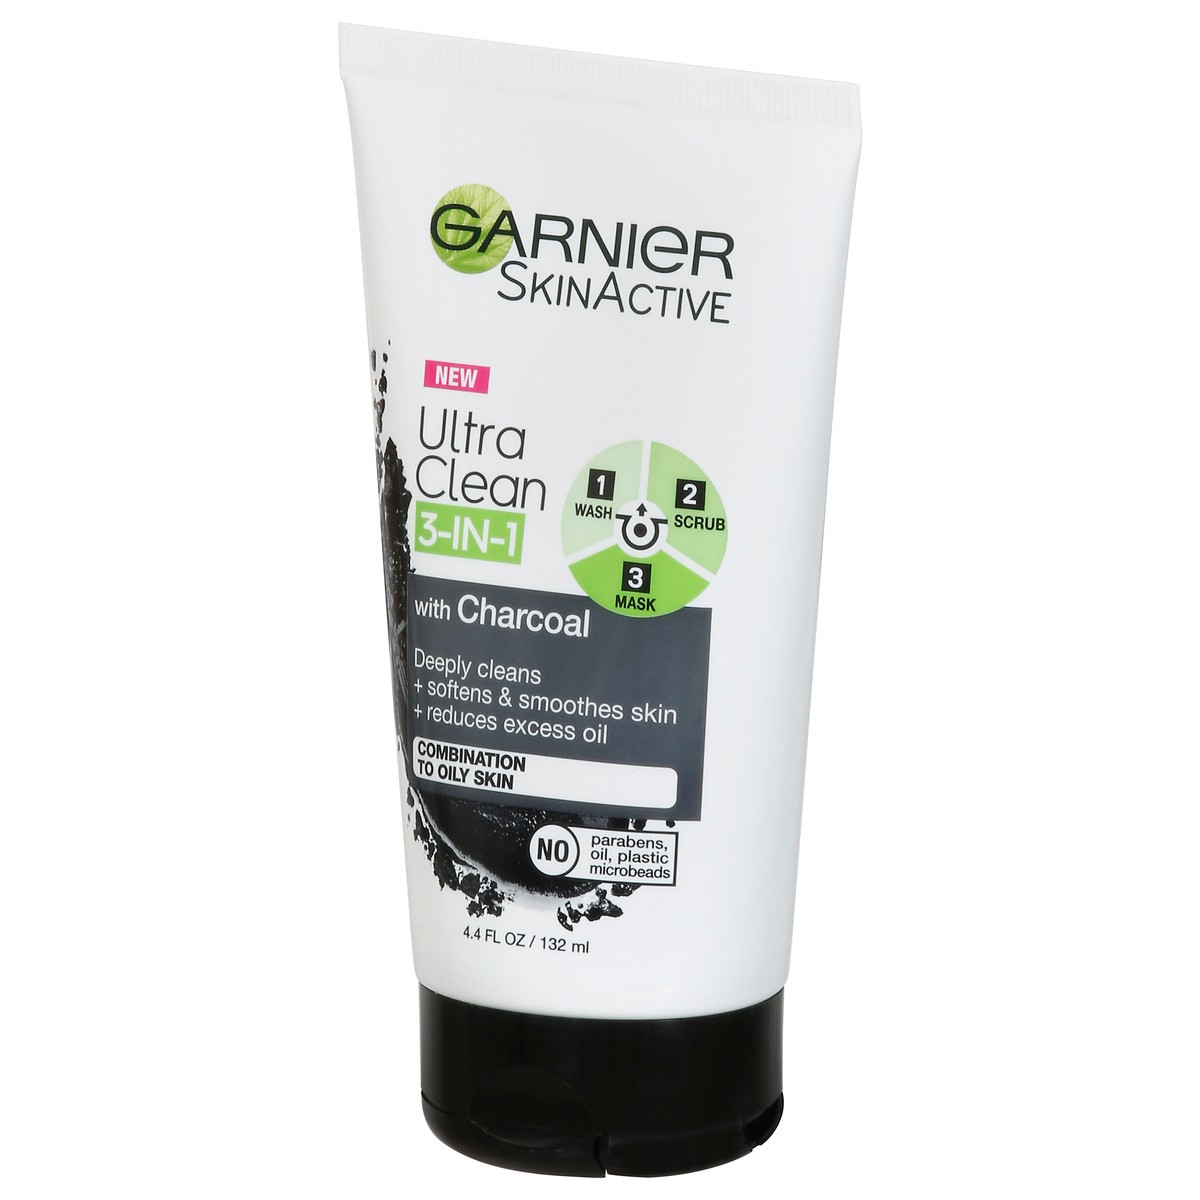 slide 4 of 12, Garnier SkinActive Charcoal 3 in 1 Face Wash Scrub and Mask, 4.4 fl oz